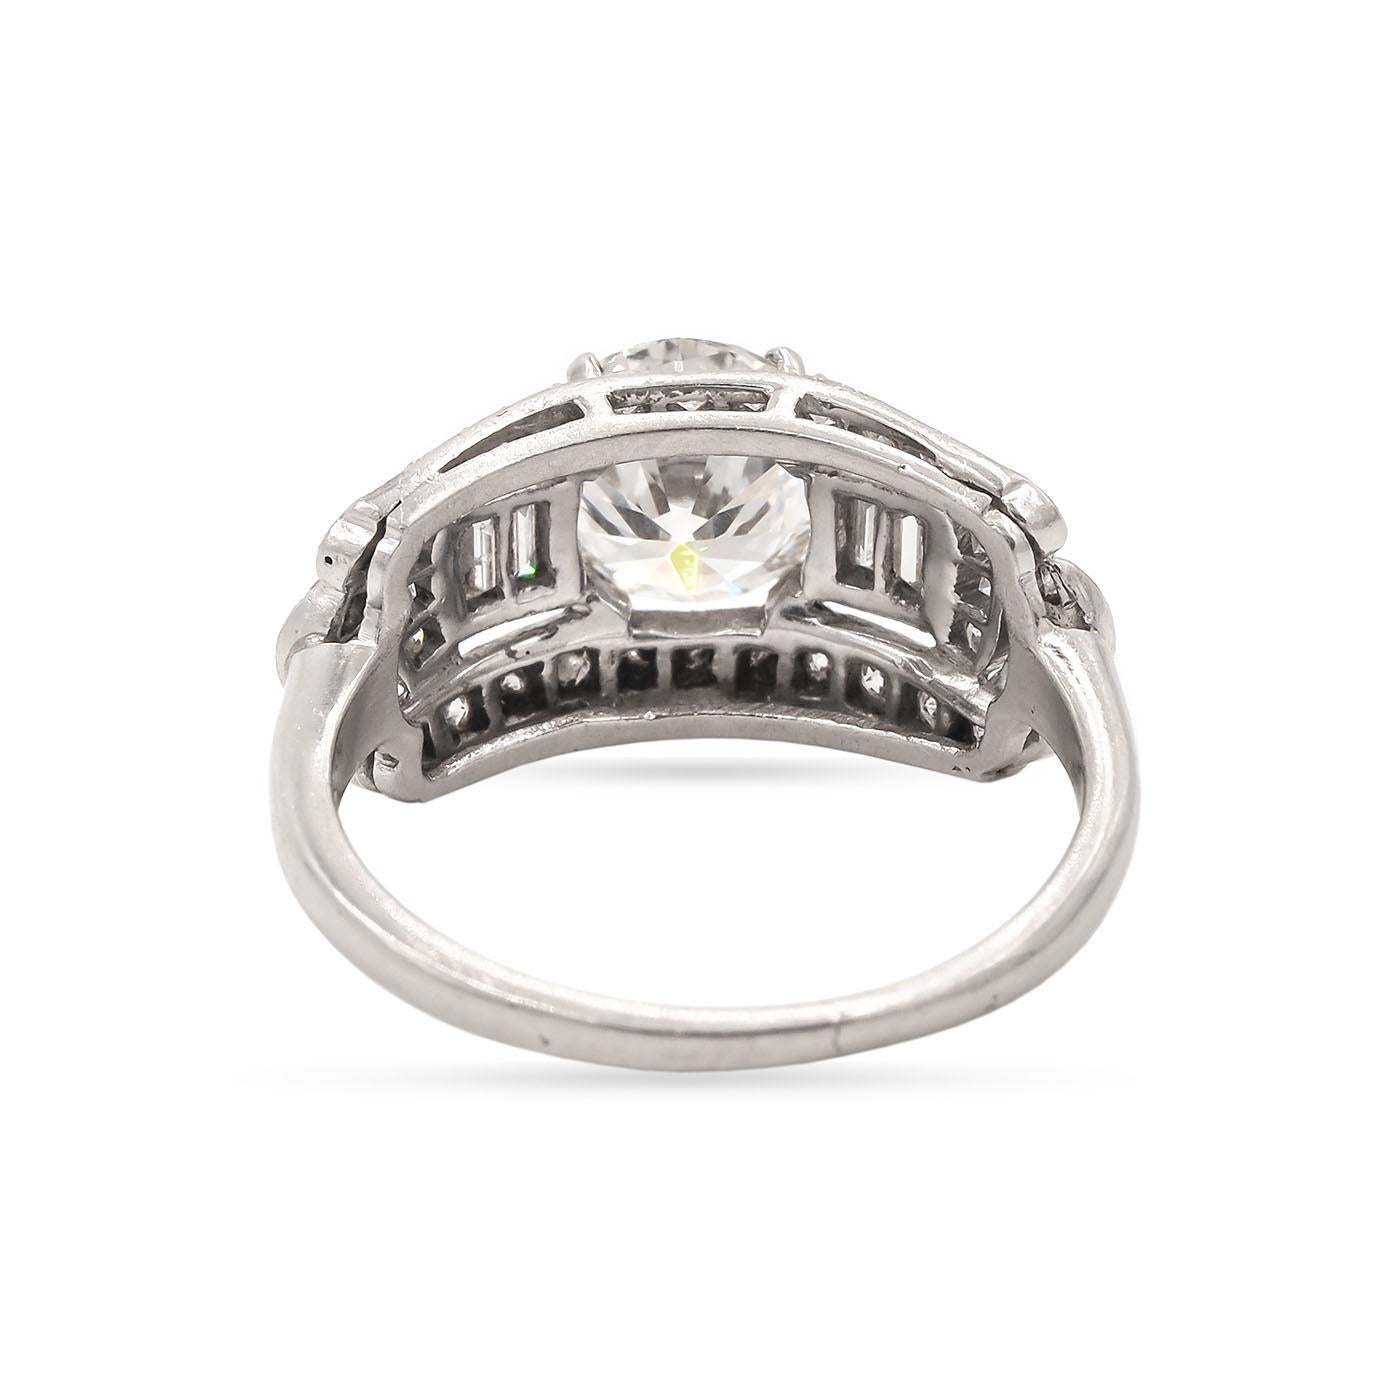 Round Cut Art Deco 1.44 Carat GIA Certified Transitional Cut Diamond Engagement Ring